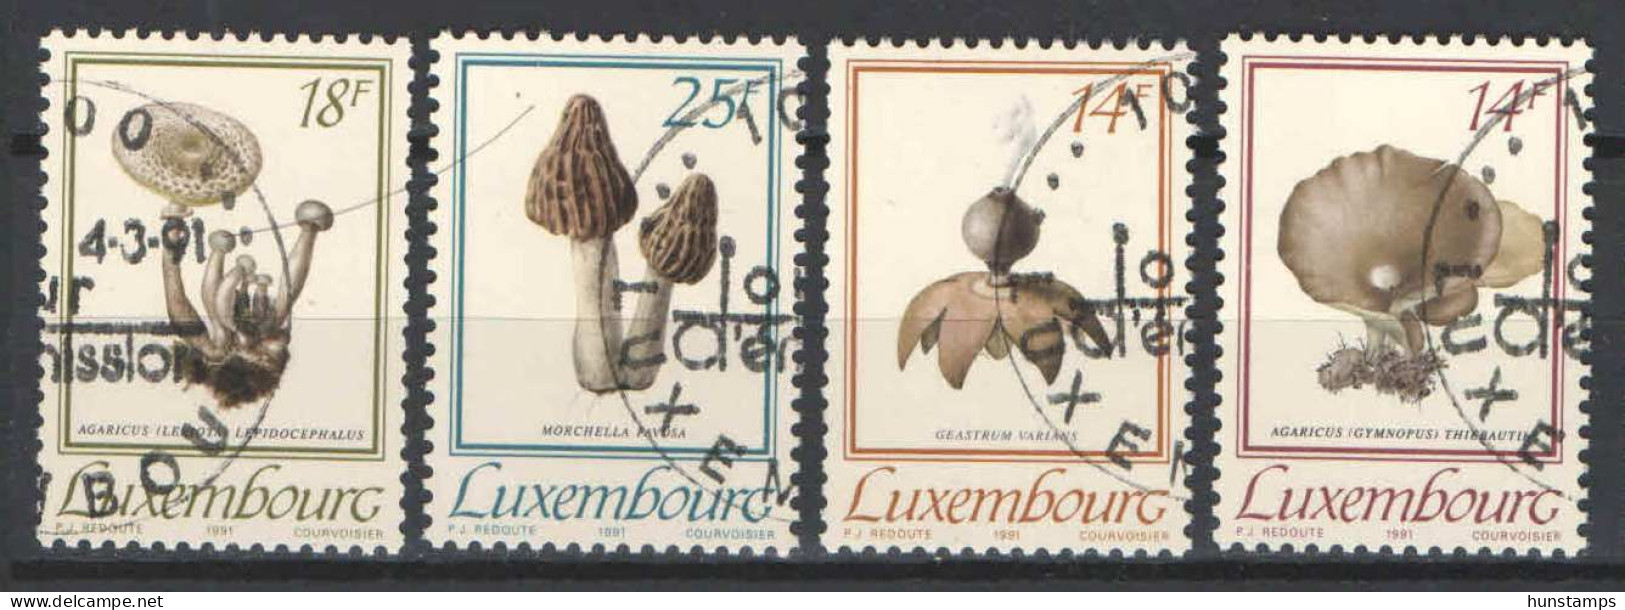 Luxembourg 1991. Mushrooms Nice Set, Used - Usados